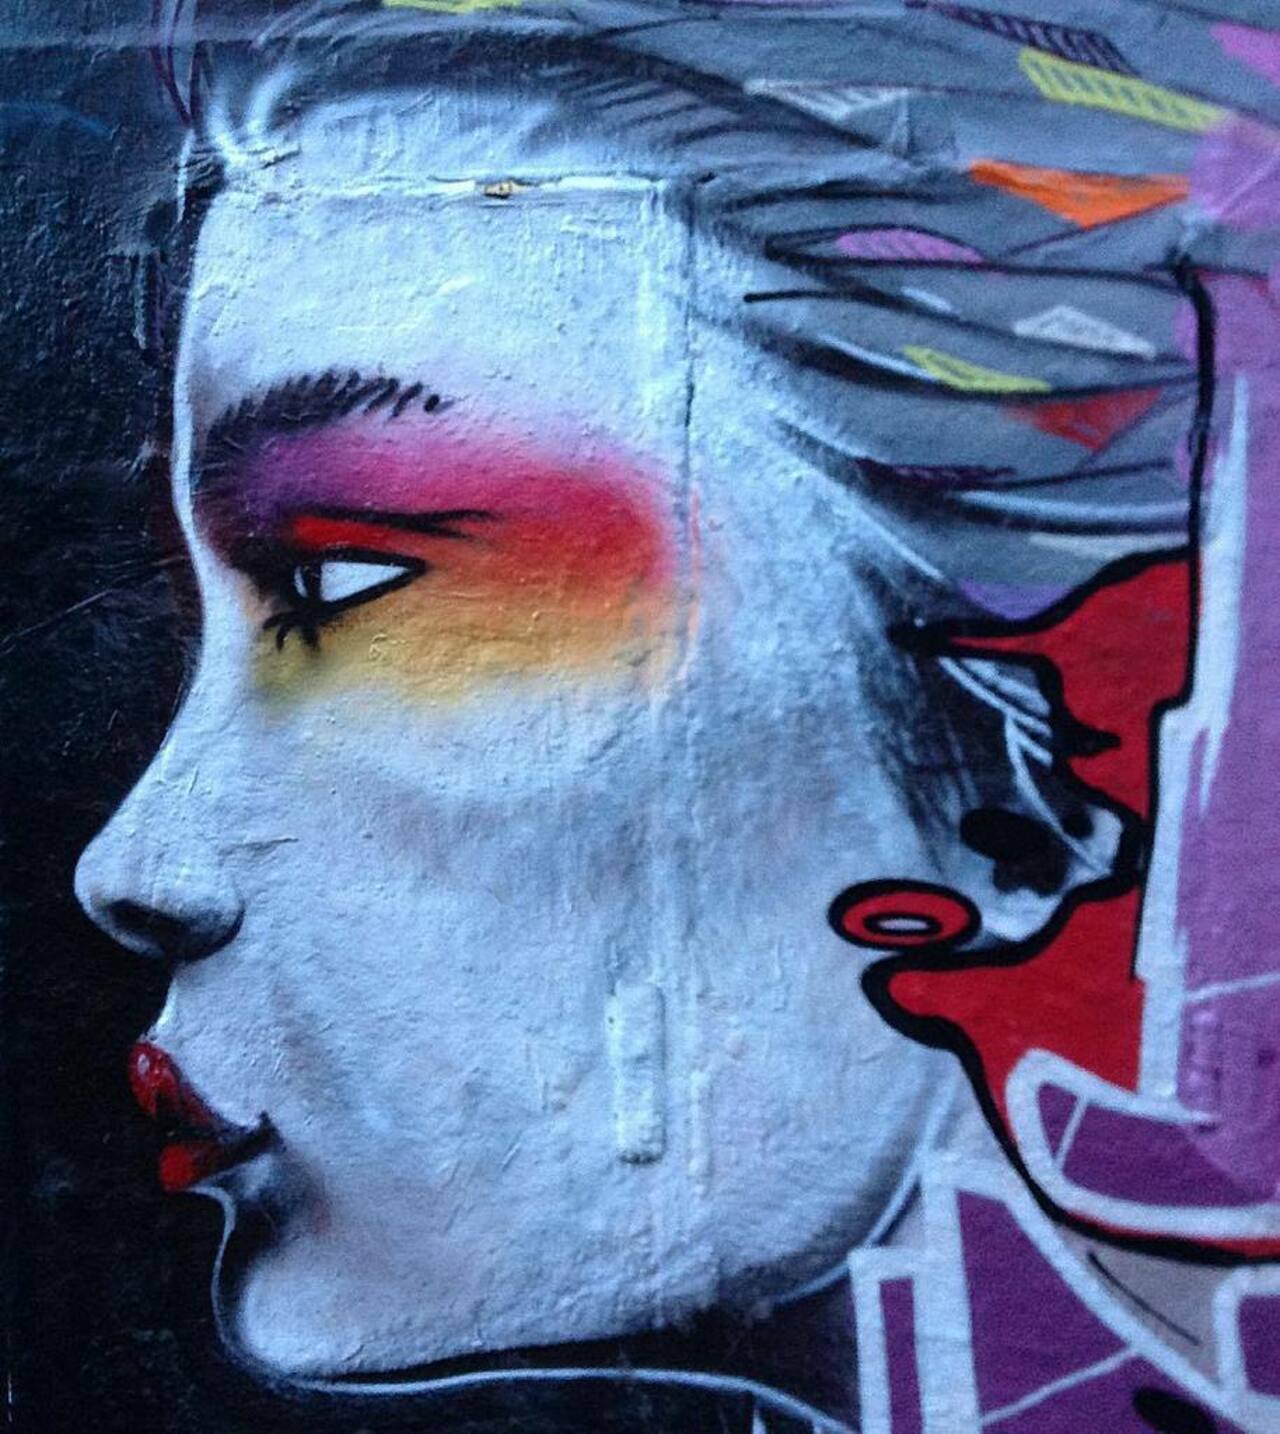 Make up #street #streetart #streetartparis #graff #graffiti #wallart #sprayart #urban #urbain #urbanart #urbainart … https://t.co/EwARlC82IJ